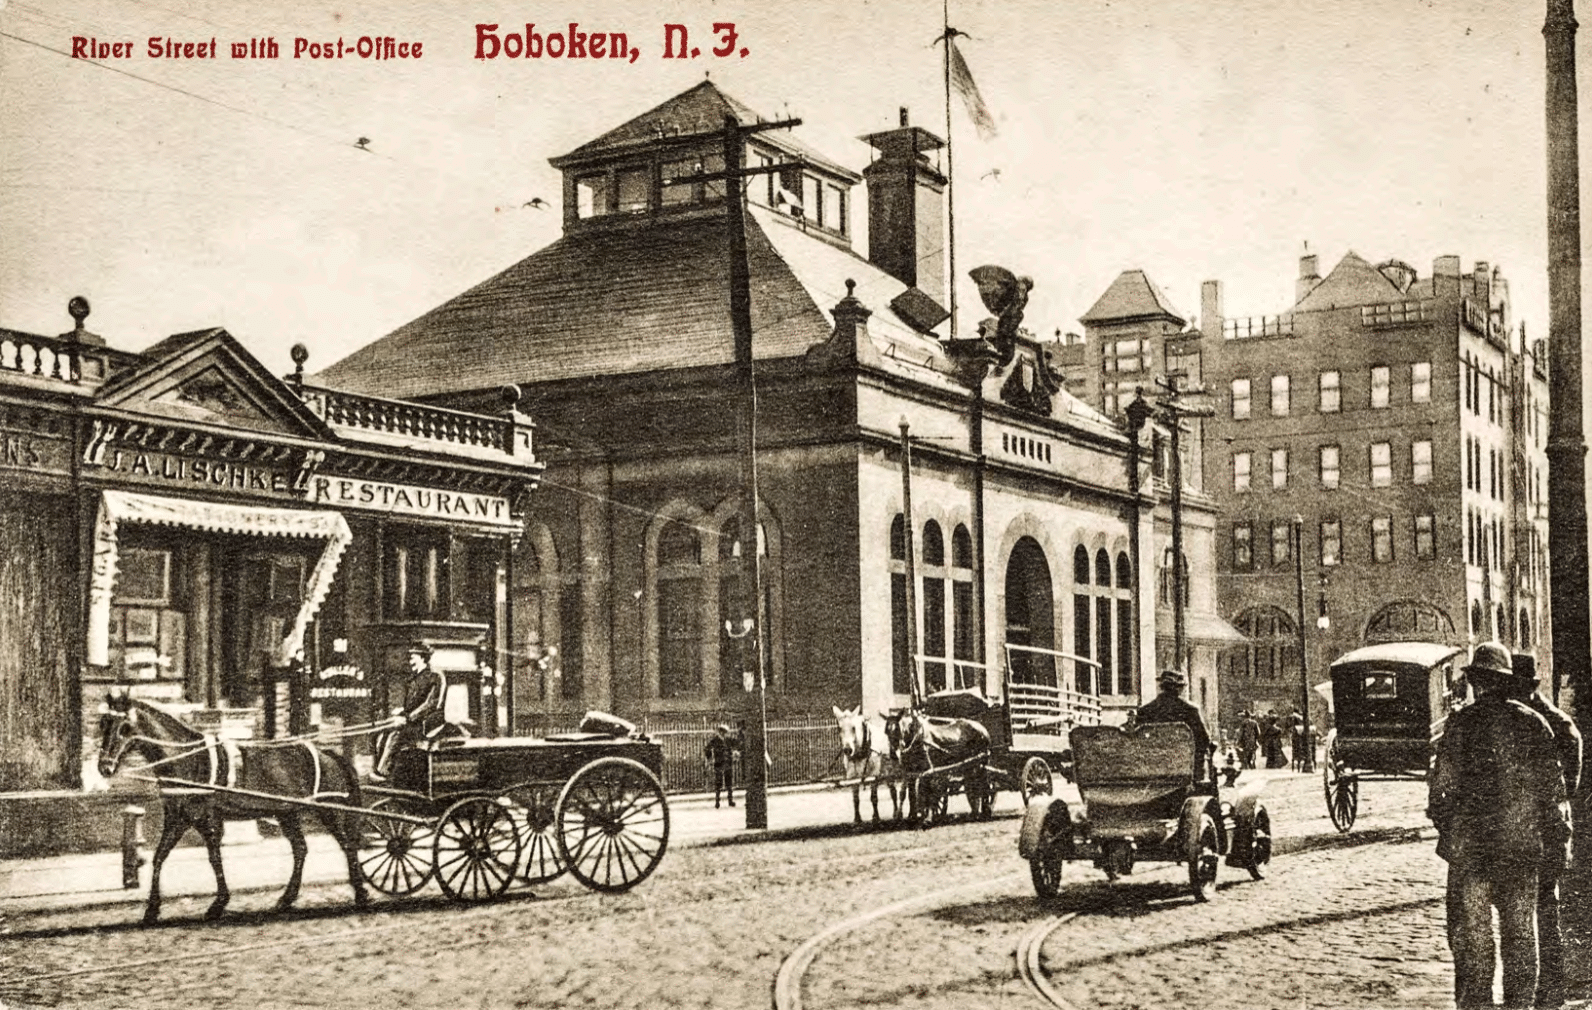 Hoboken main post office then